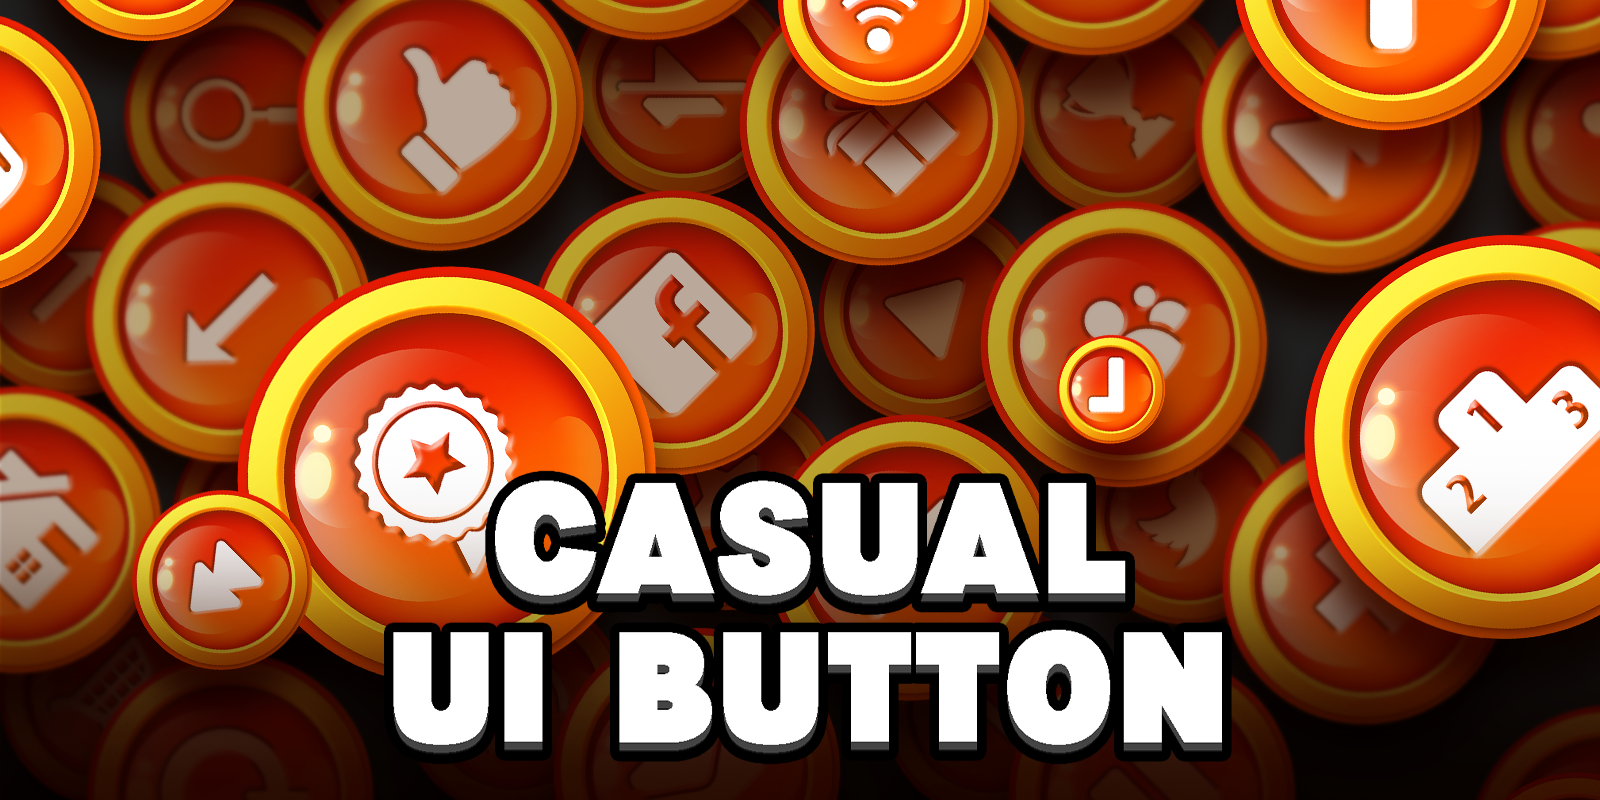 Casual UI Button #3